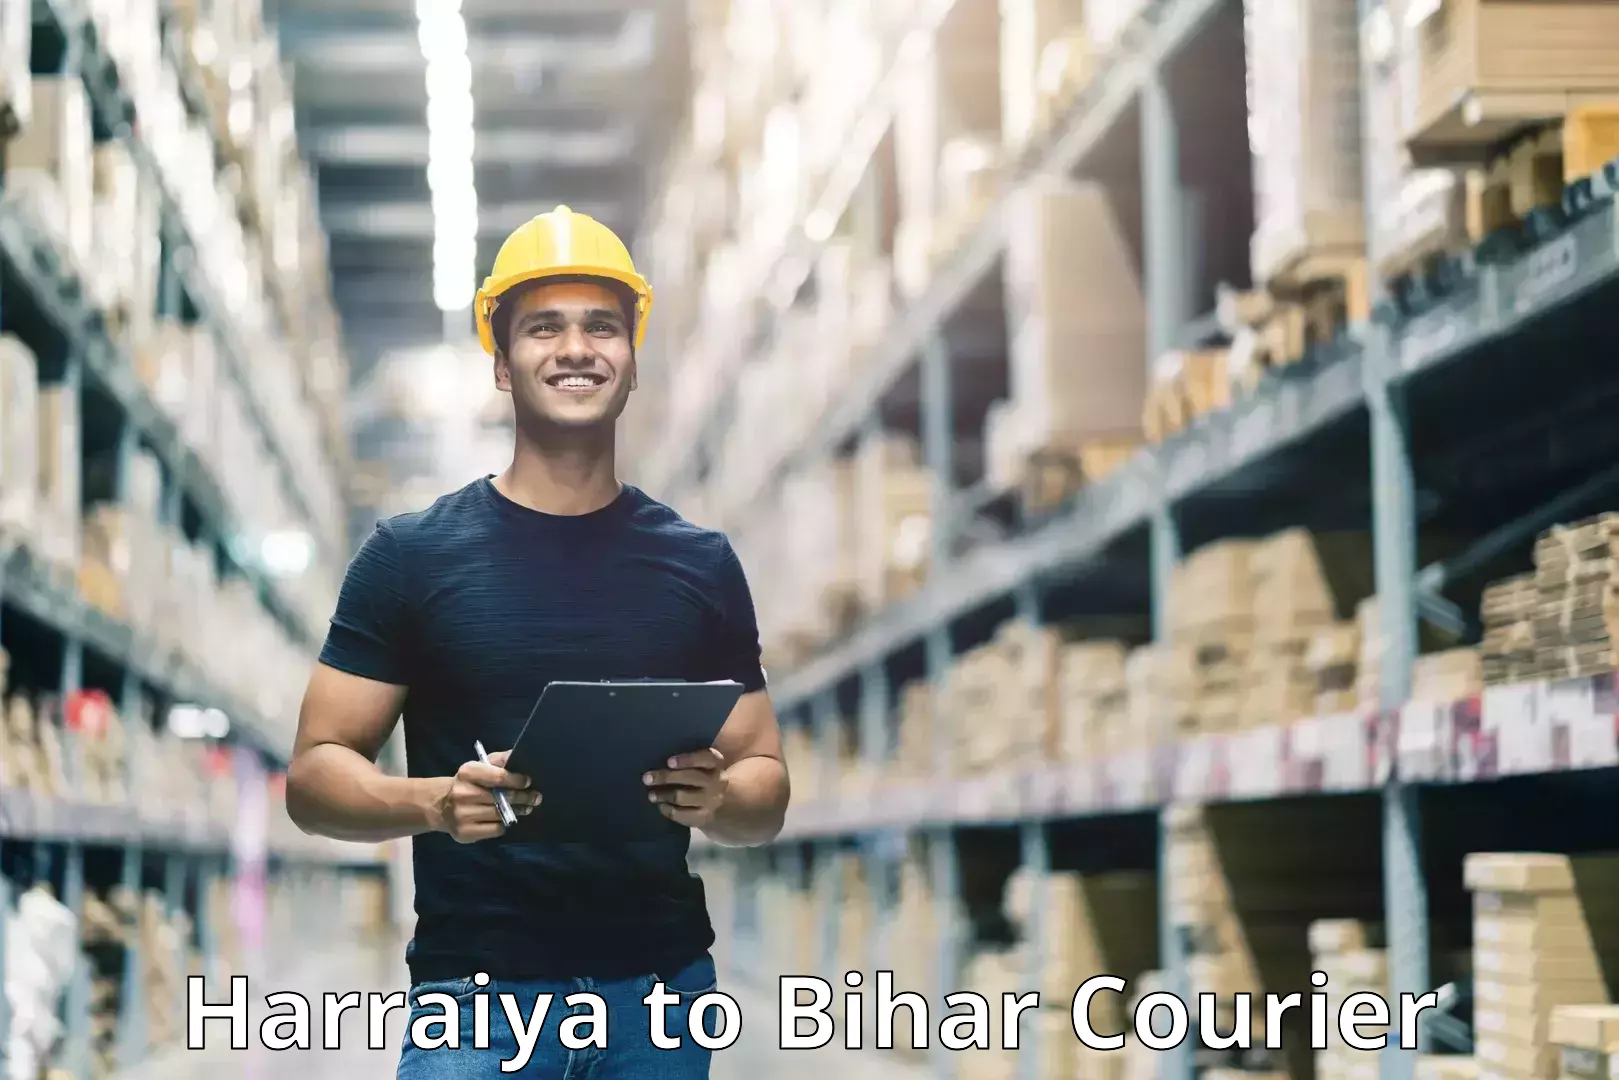 Courier service innovation Harraiya to Phulparas